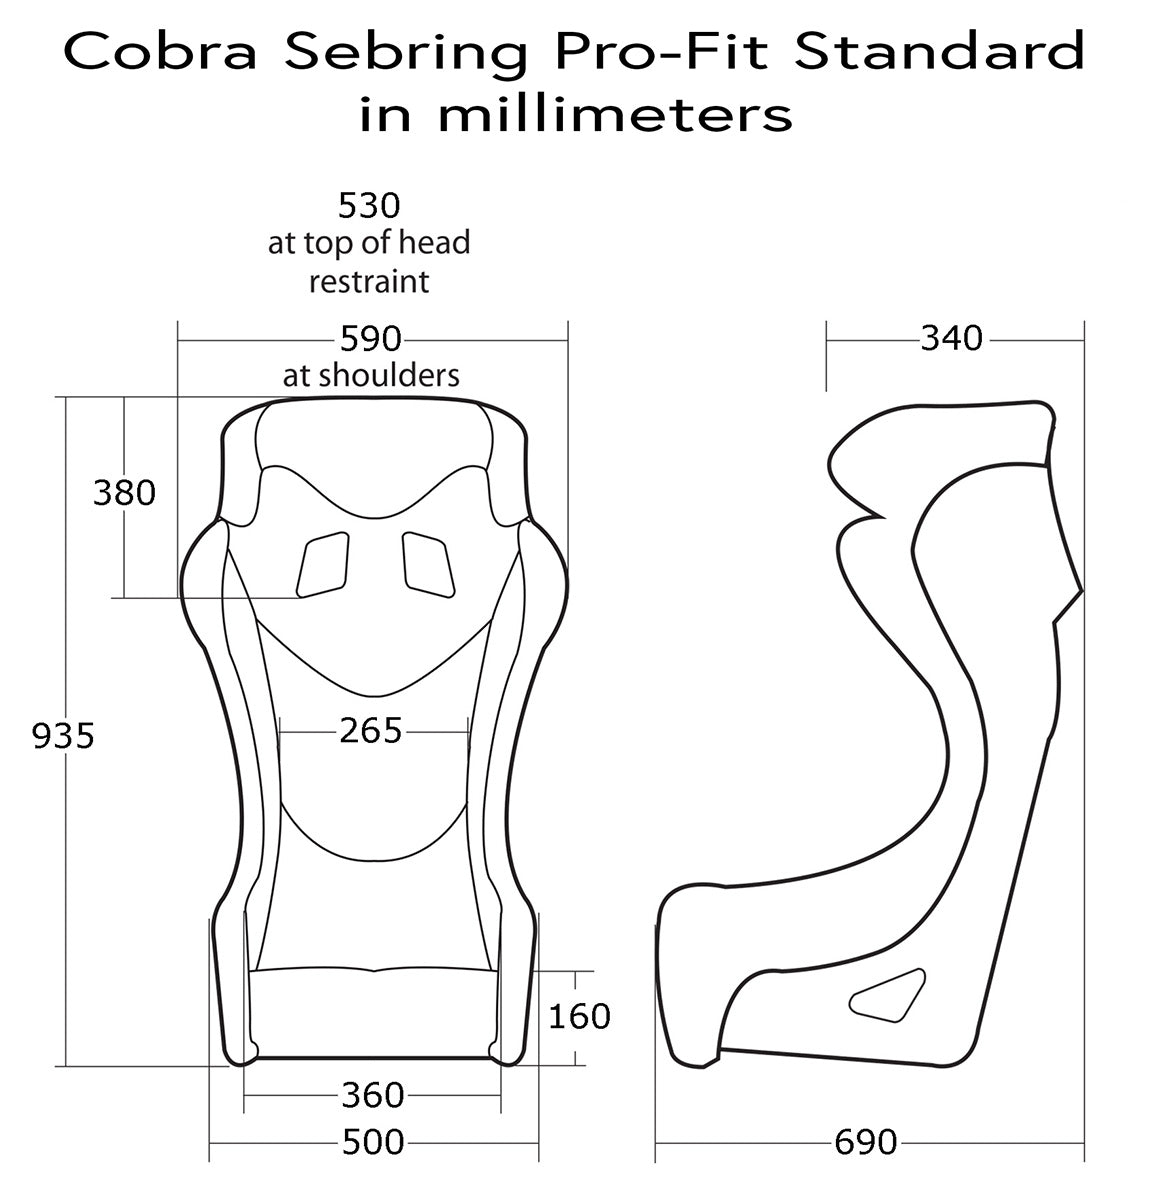 Cobra Sebring Pro-Fit Racing Seat dimensions